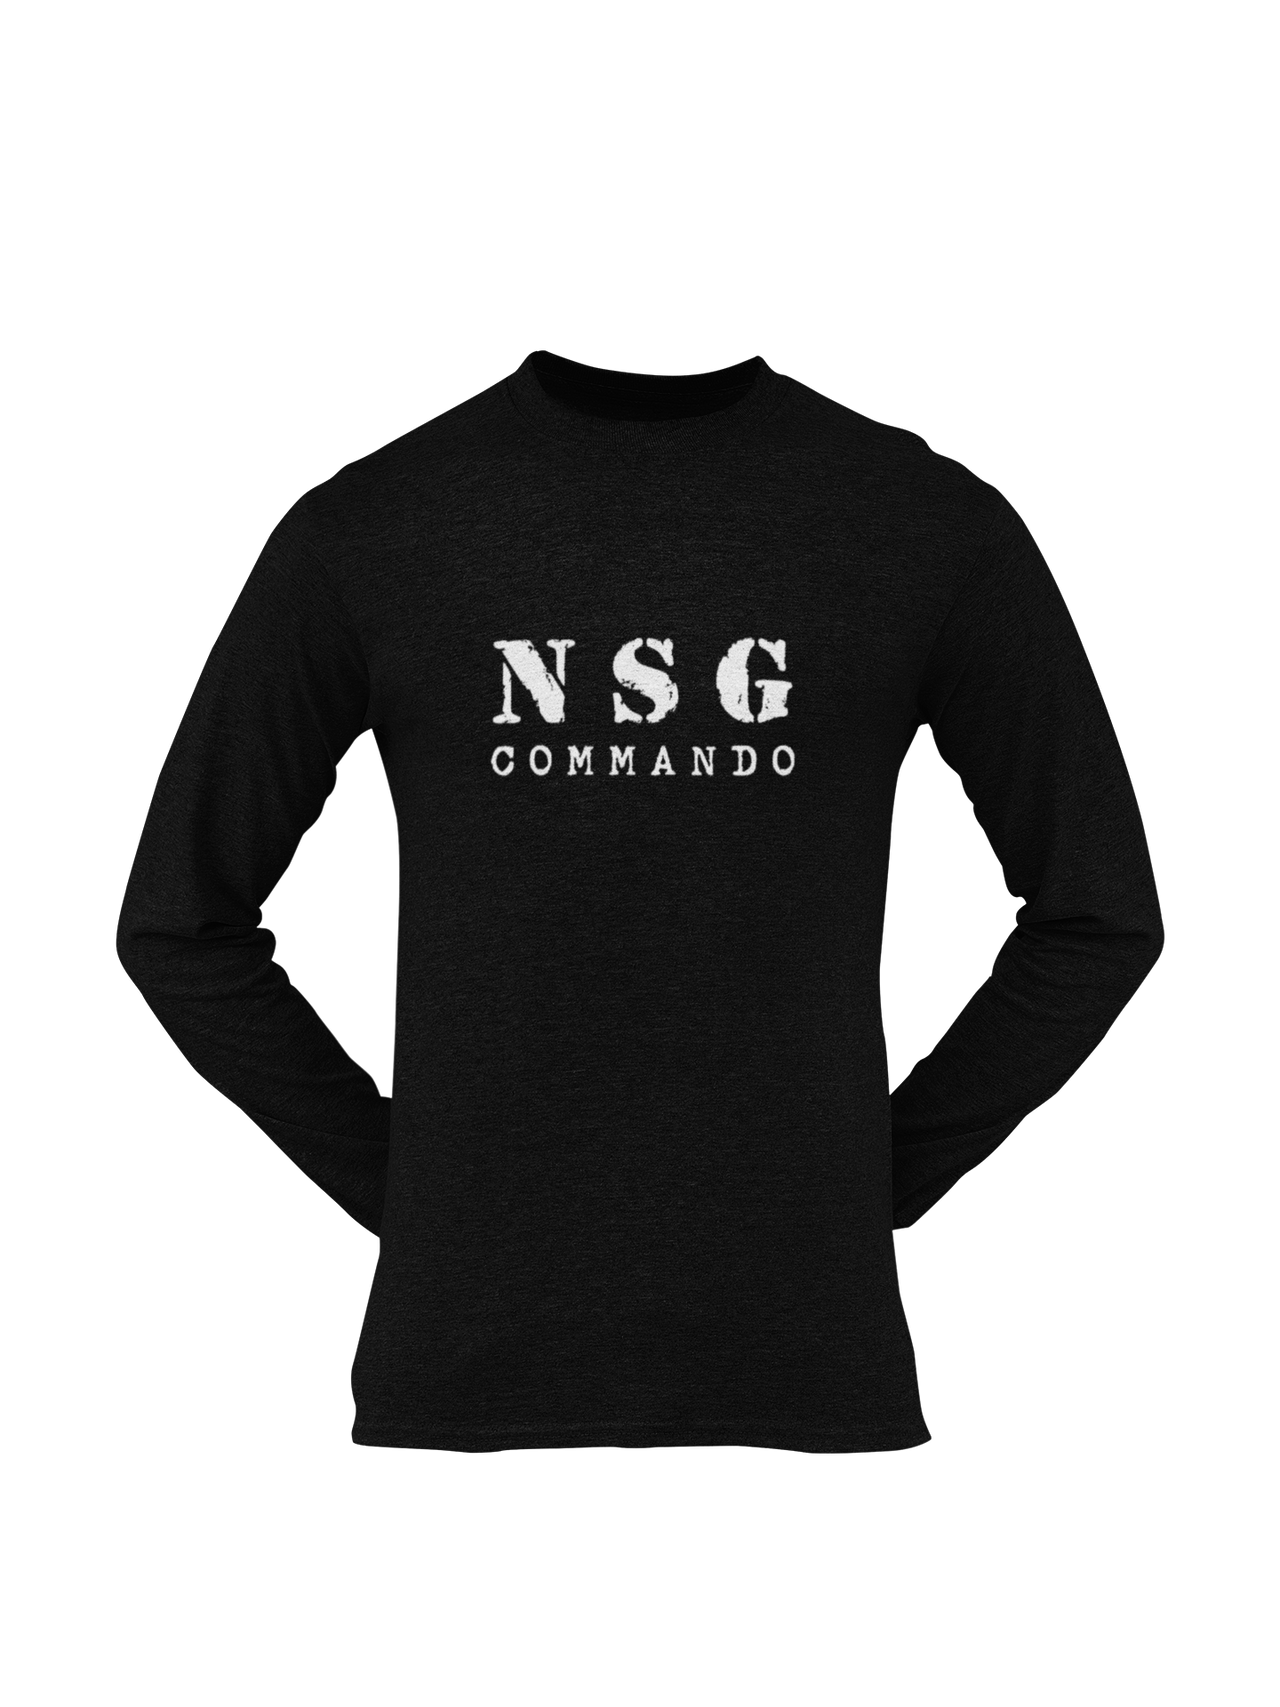 NSG T-shirt - NSG - Commando (Men)